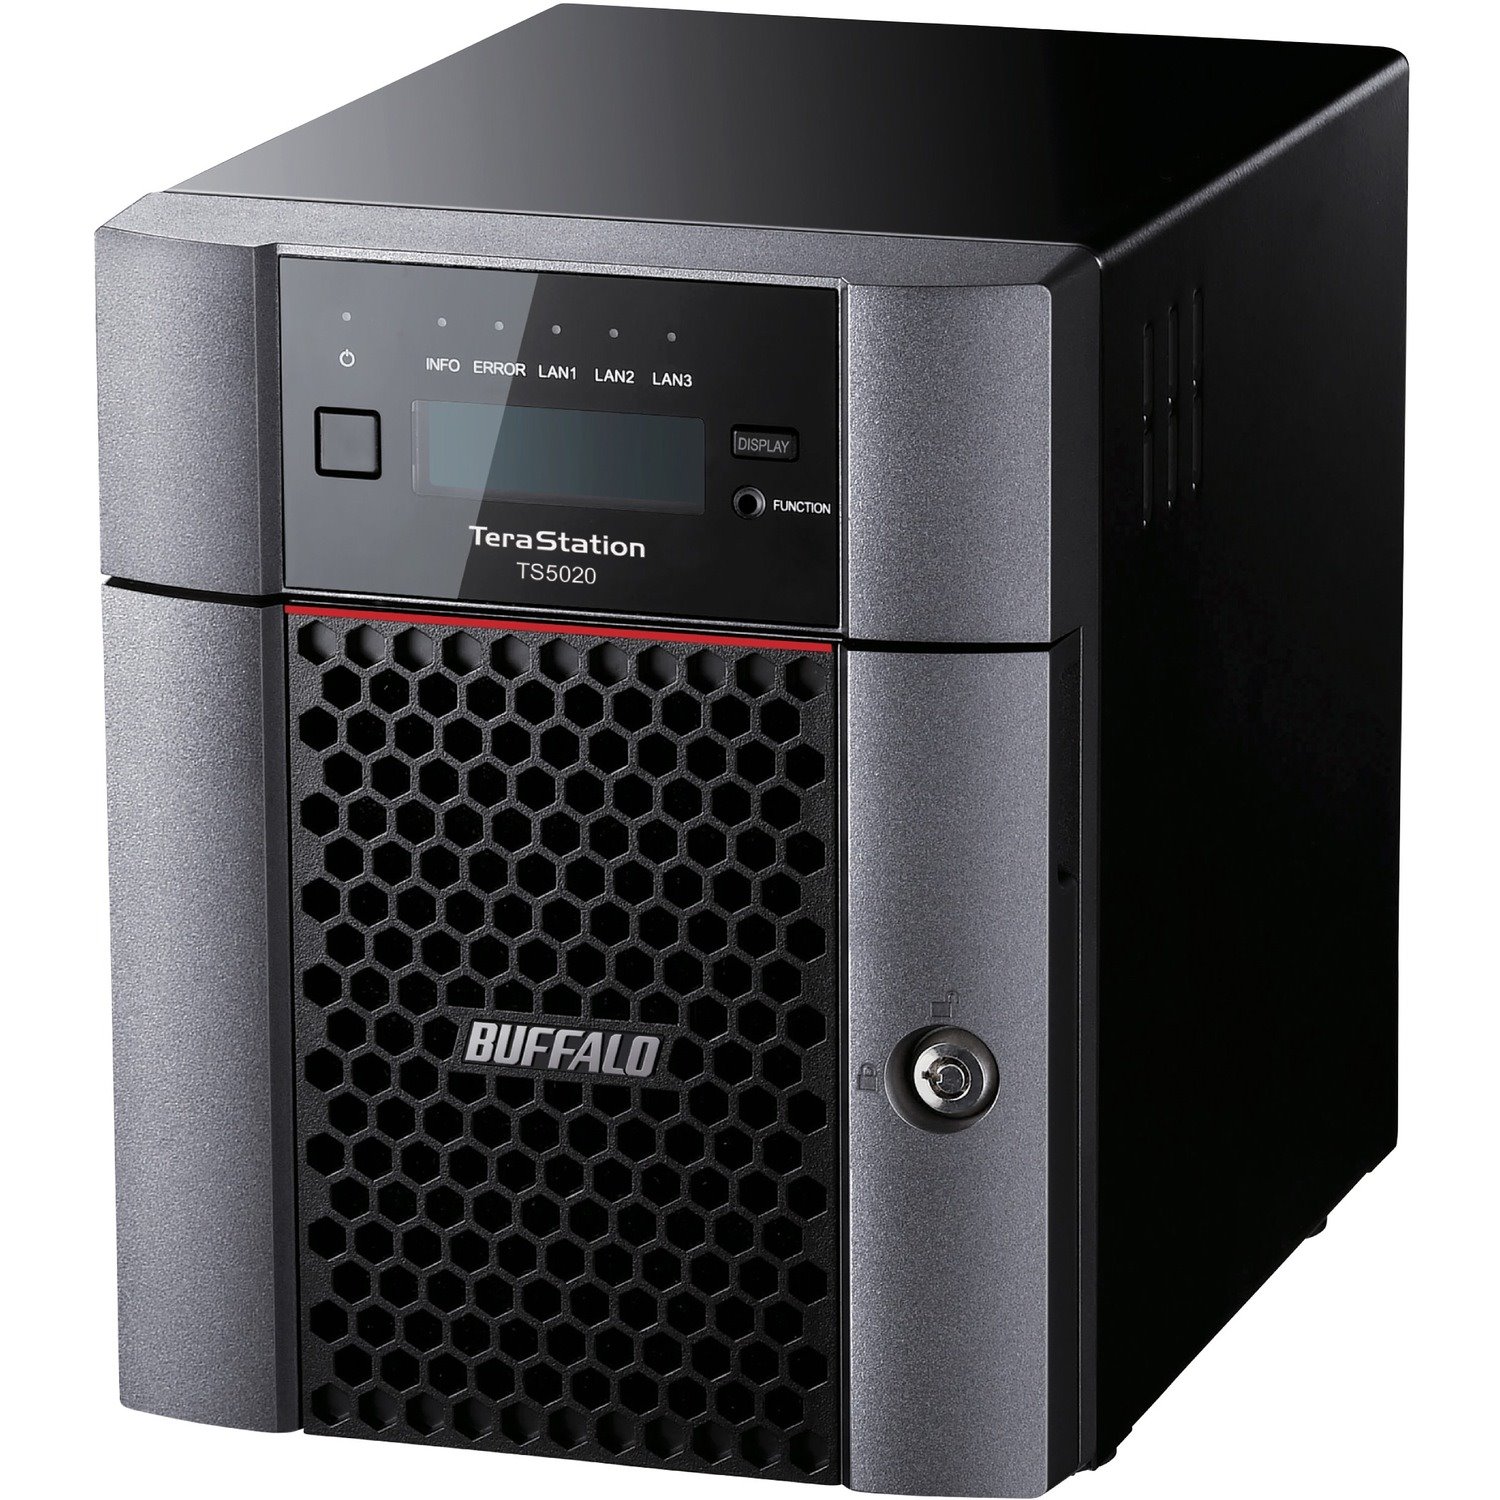 BUFFALO TeraStation 5420 4-Bay 64TB (4x16TB) Business Desktop NAS Storage Hard Drives Included